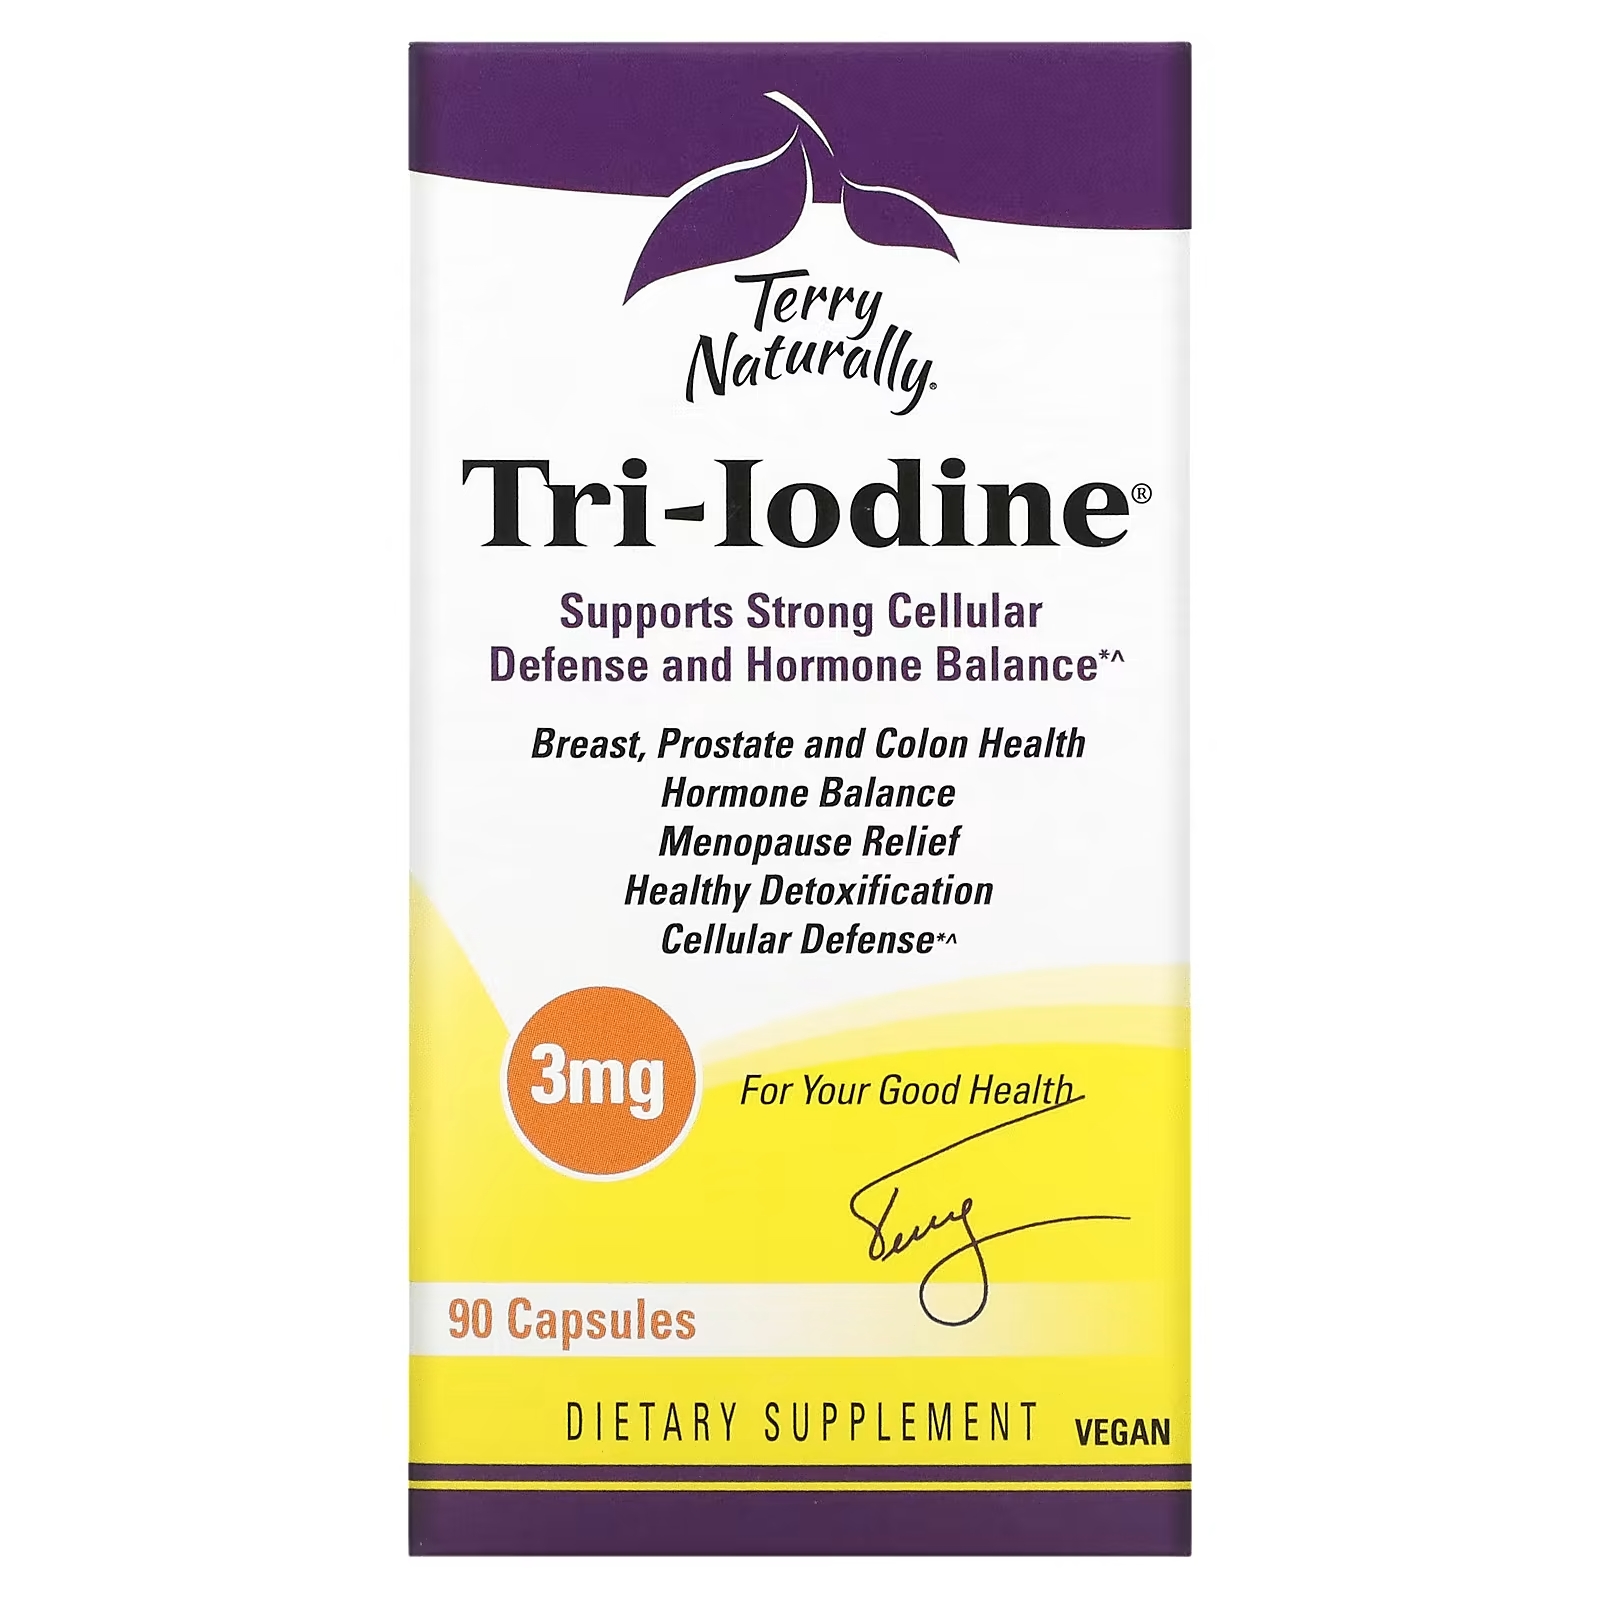 Пищевая Добавка Terry Naturally Tri-Iodine, 90 капсул europharma terry naturally terry naturally tri iodine 12 5 мг 90 капсул